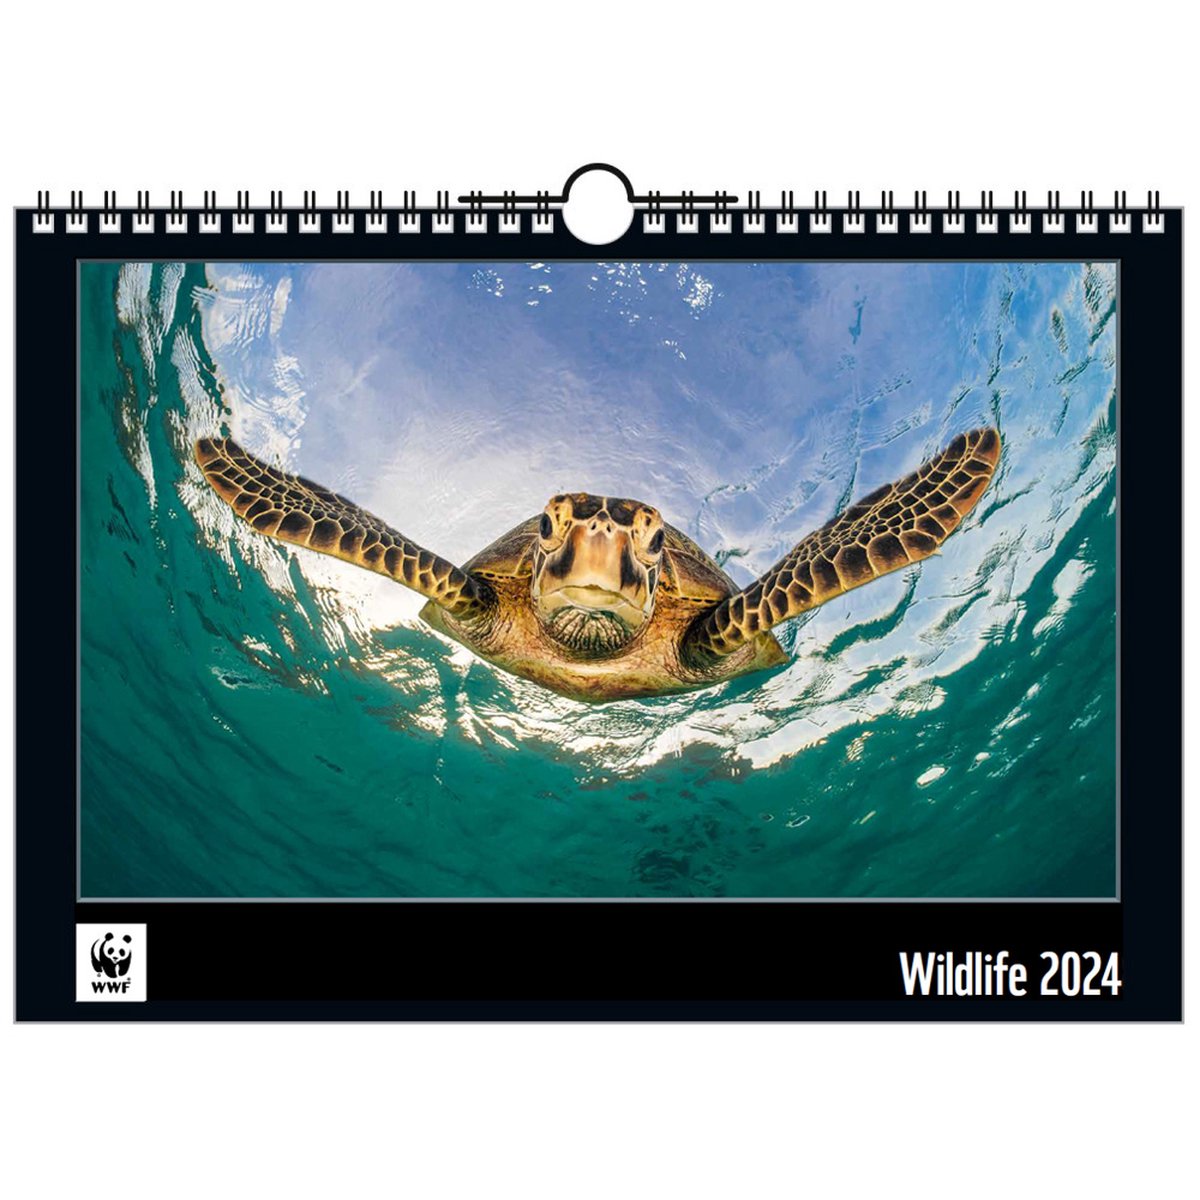 WWF Wandkalender 2024 - maandkalender - 12 schitterende dieren foto's - natuur - ophangbaar